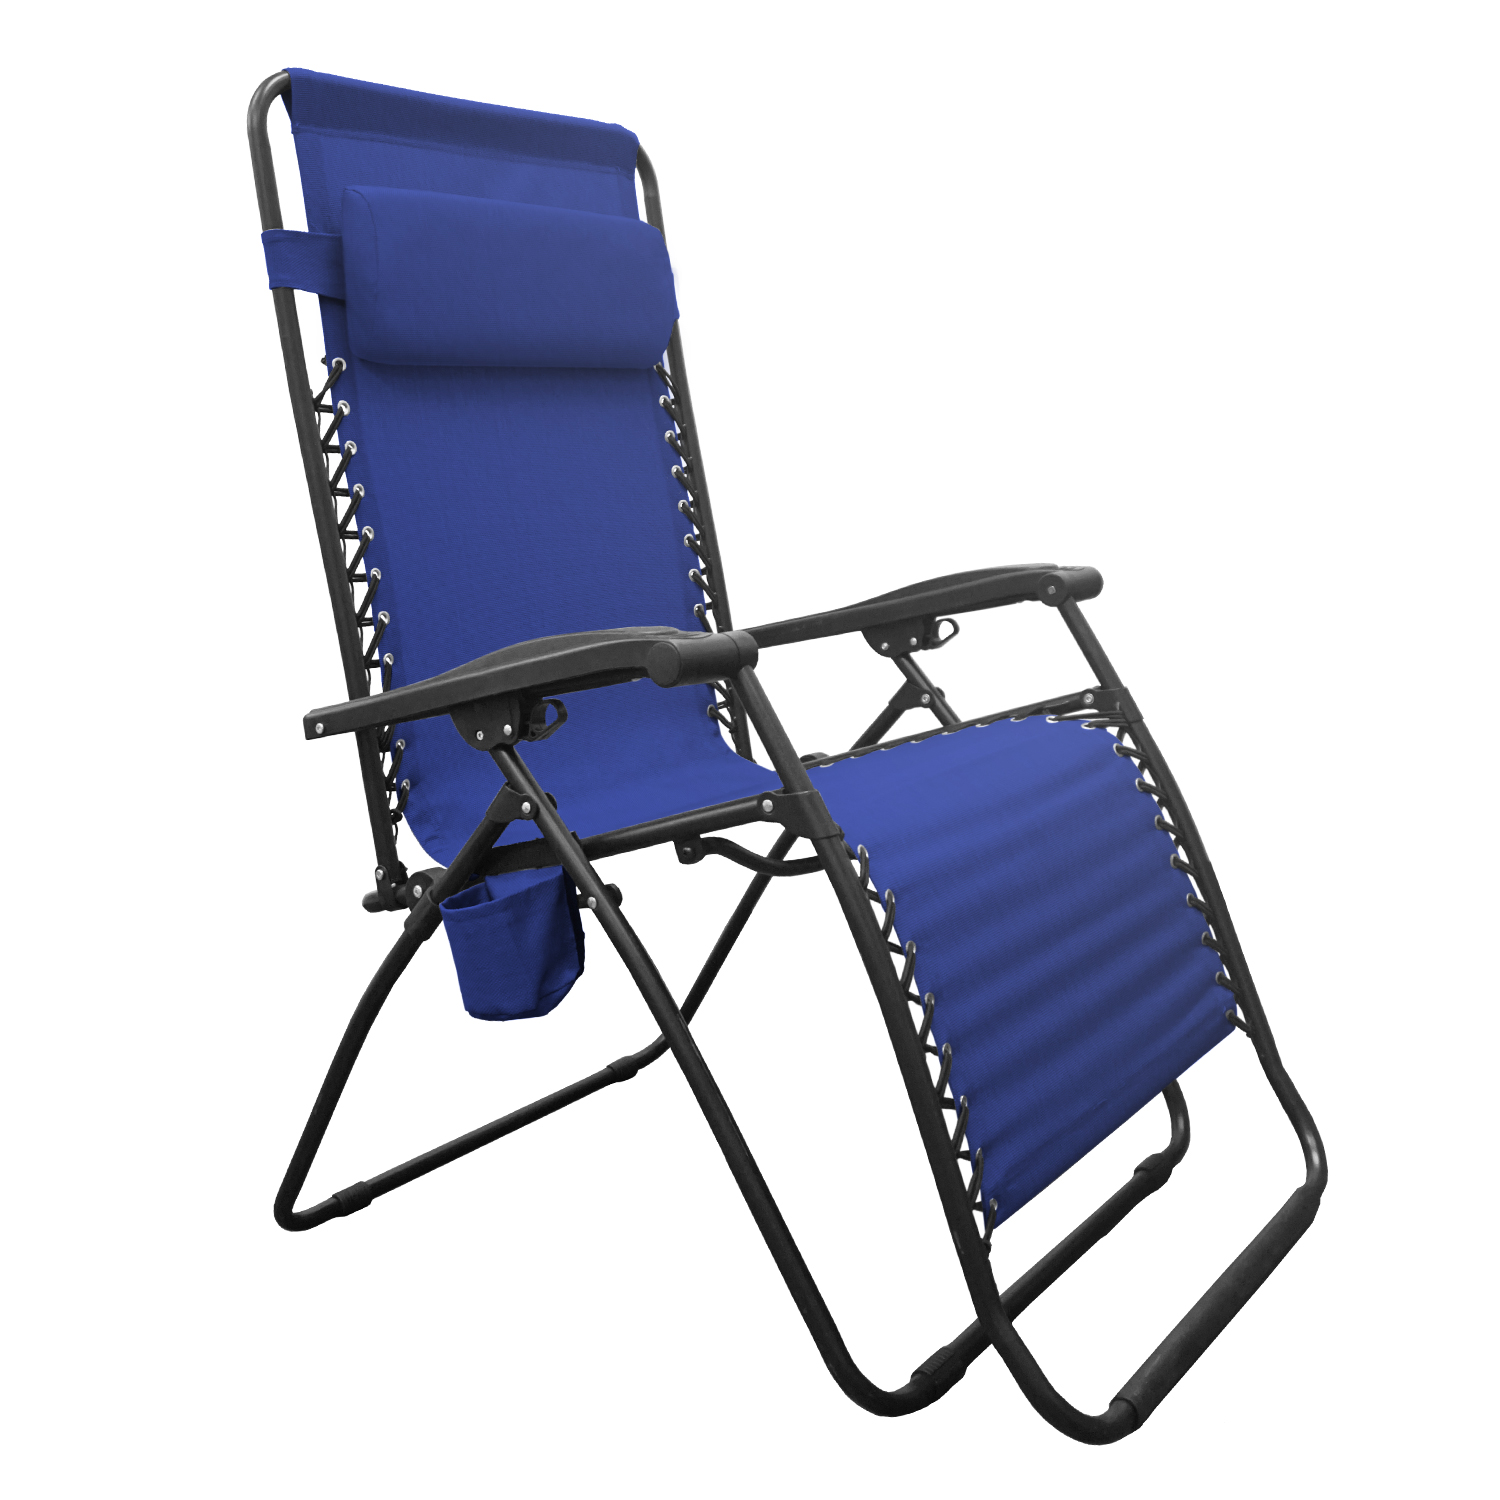 Caravan Sports Infinity Big Boy Zero Gravity Chair Blue - image 1 of 2